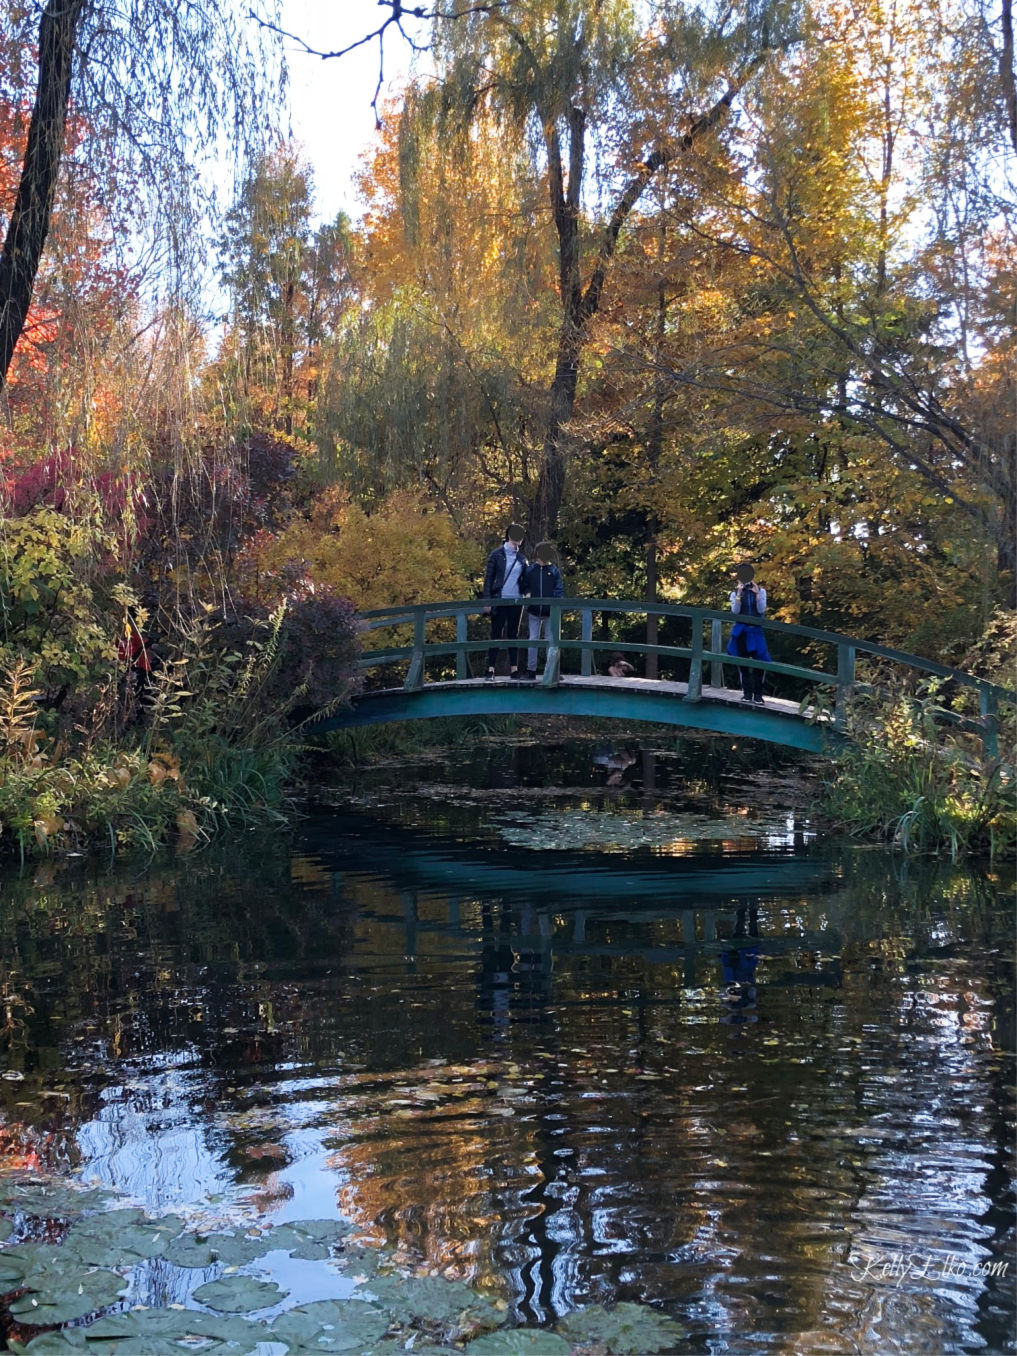 Grounds for Sculpture - visit to see Monet's lily pond come to life kellyelko.com #sculpture #parks #roadtrips #daytrips #monet #nj #njtravel #visitnj